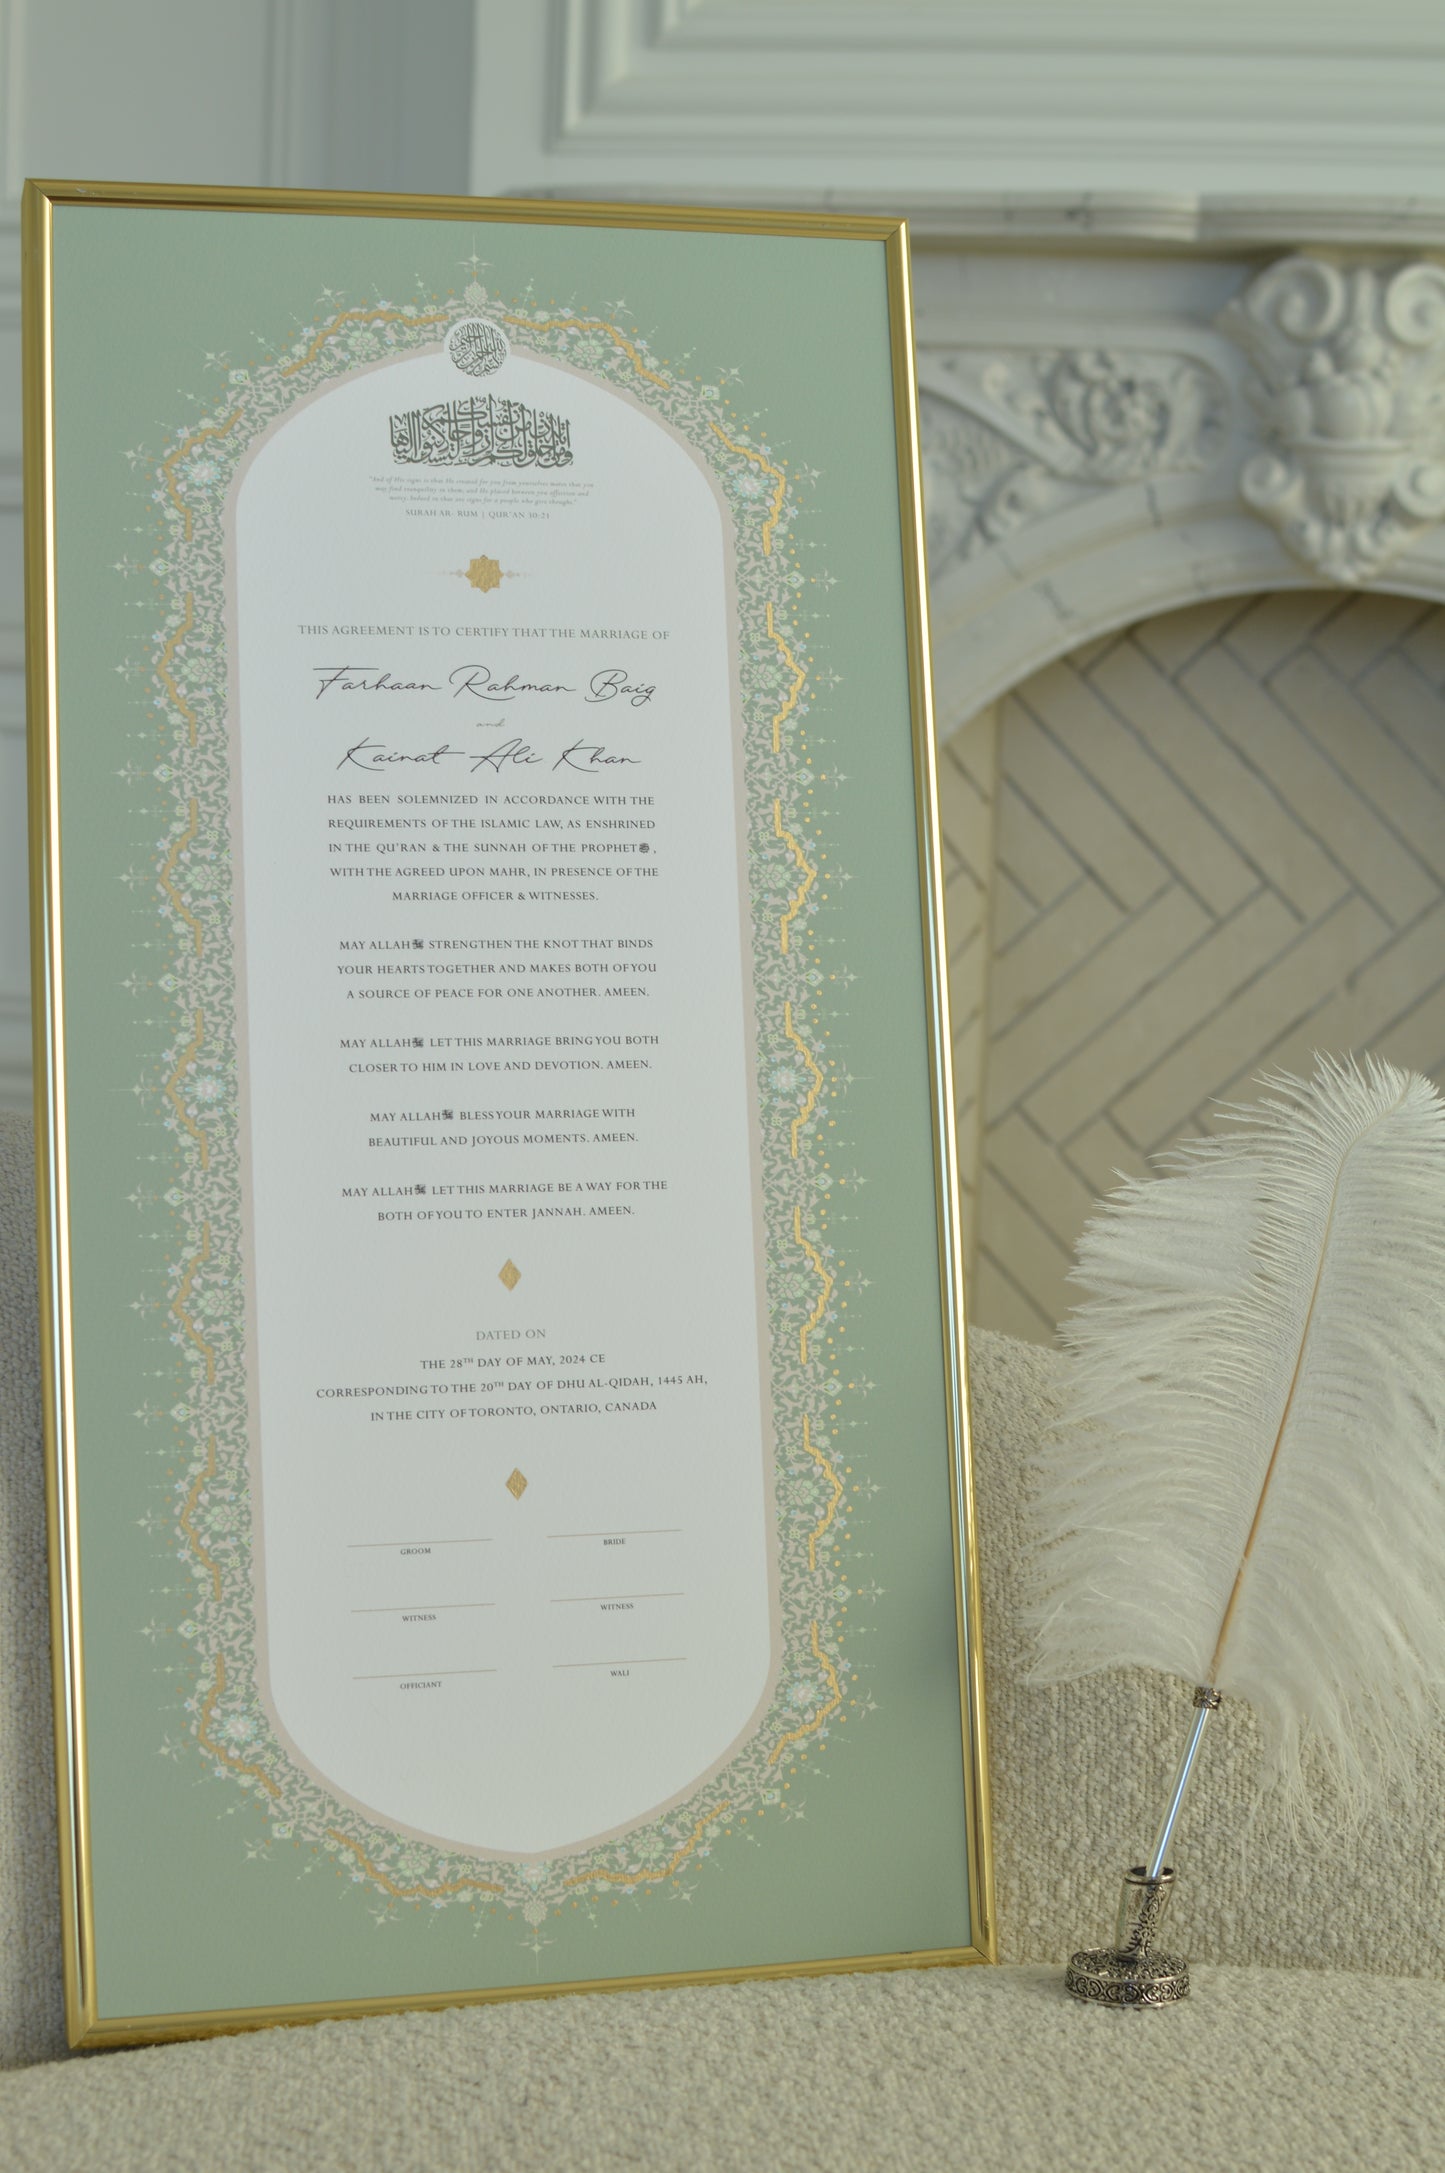 BUNDLE: Raeesa Sage Nikah Certificate Gold Embellishment + Frame + Pen